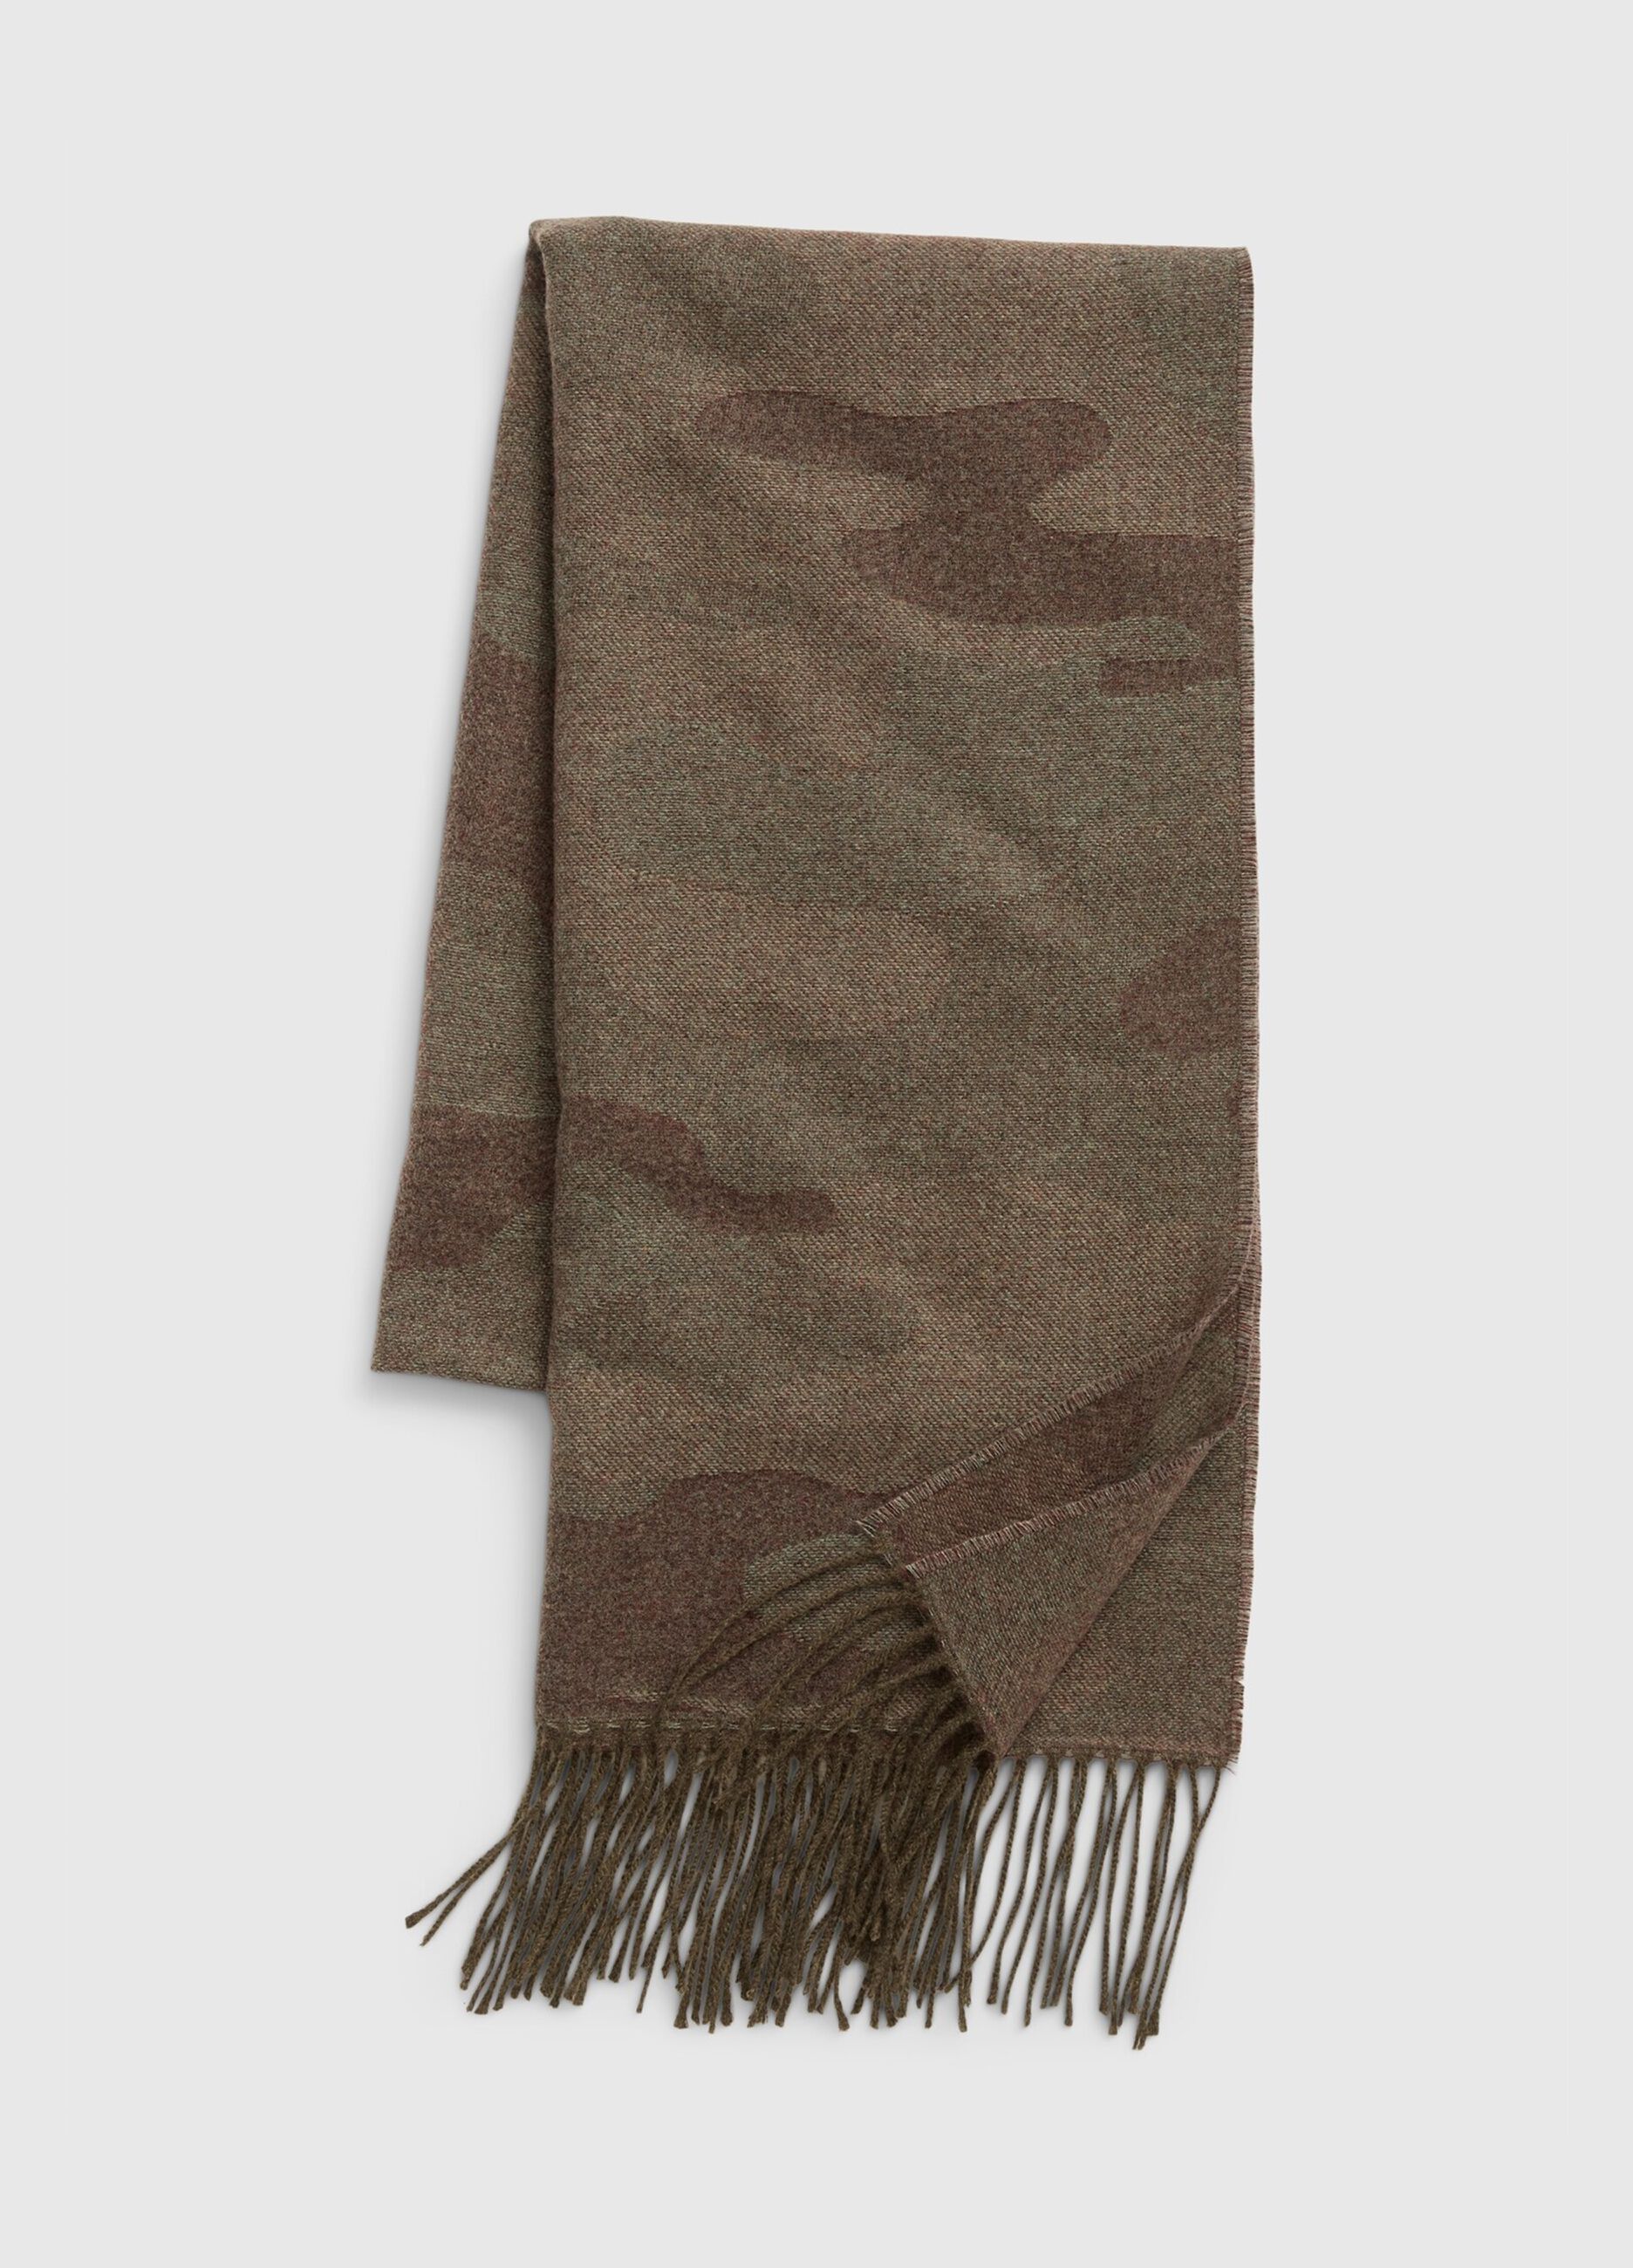 Camo scarf with fringe